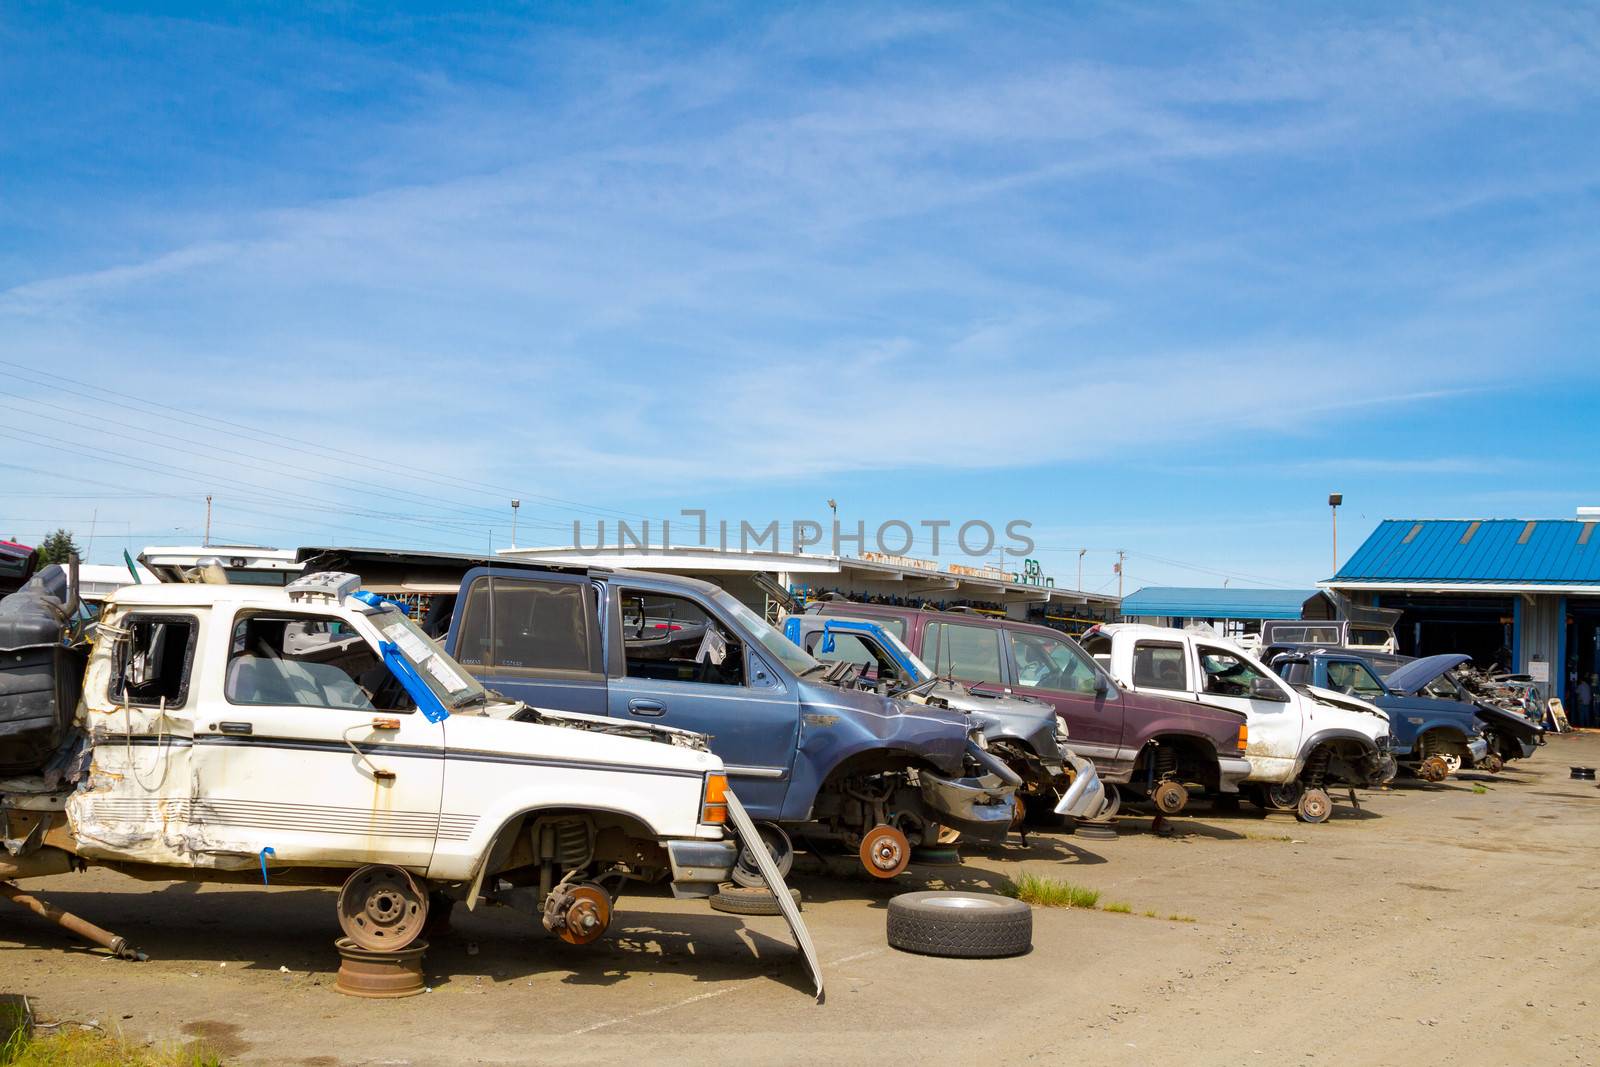 Auto Salvage Yard Junkyard by joshuaraineyphotography